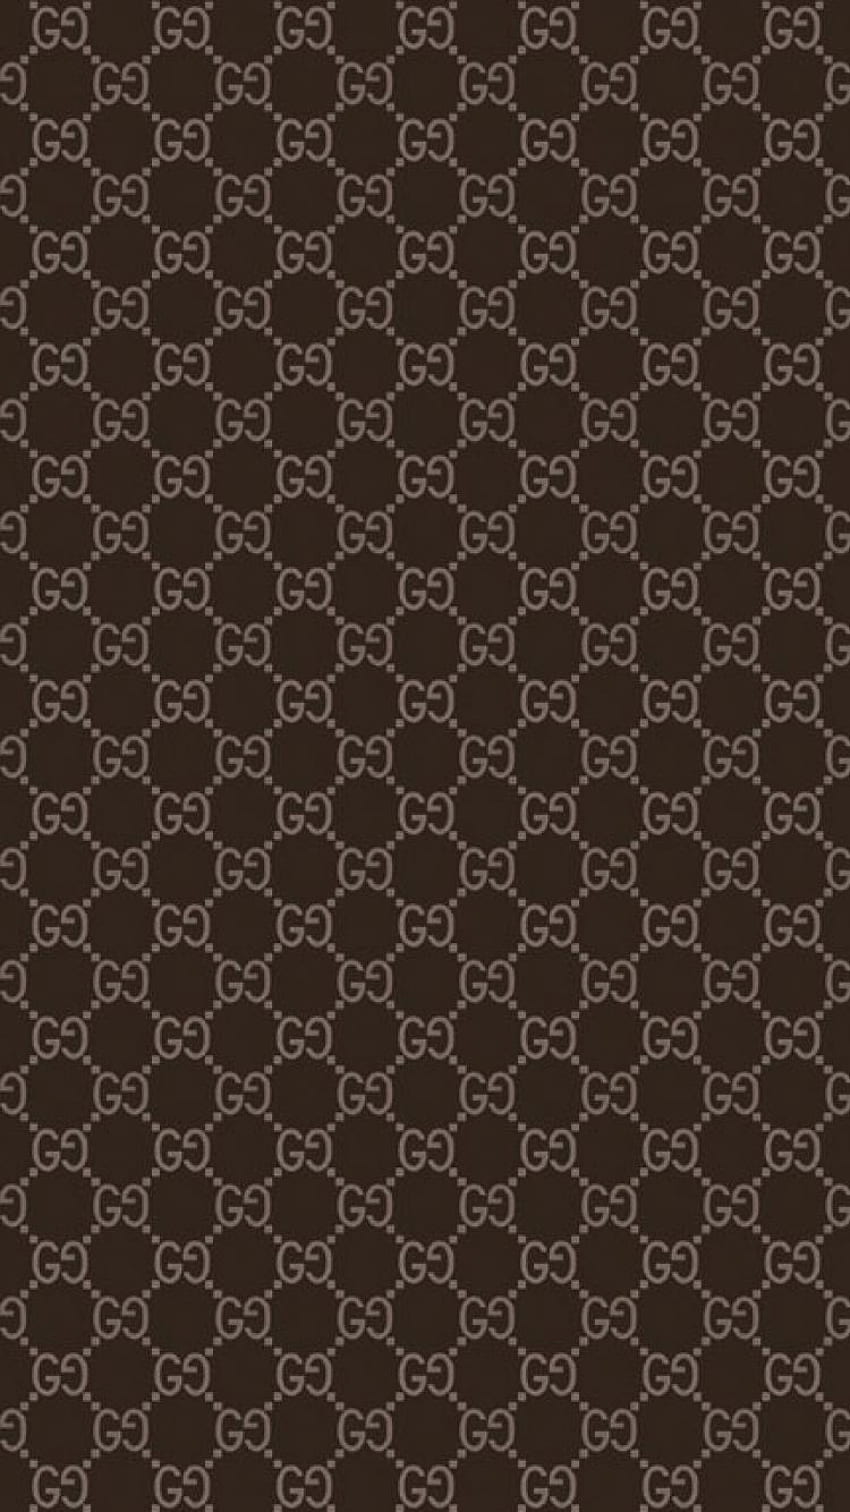 Background Gucci Wallpaper - EnWallpaper